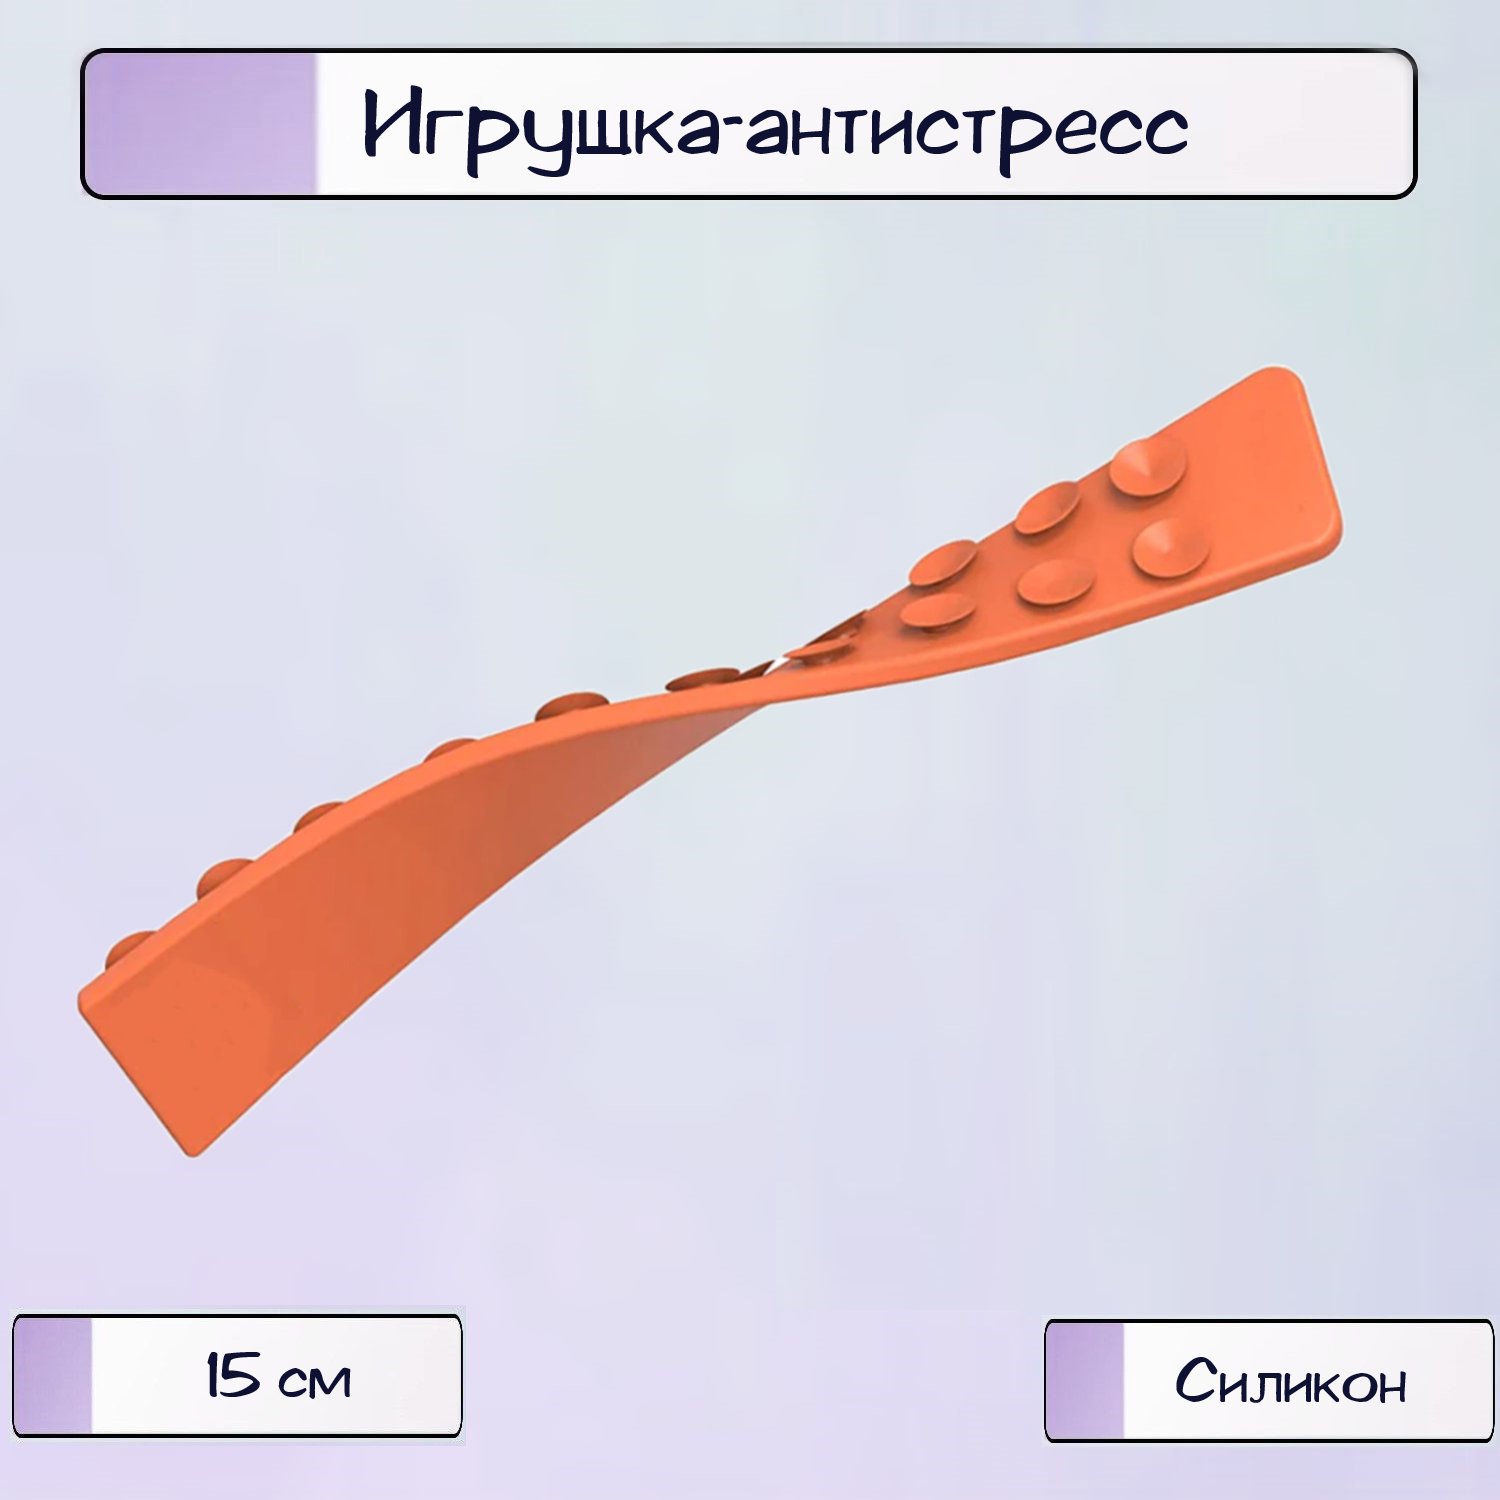 Игрушка - антистресс Ripoma сквидпопс оранжевая - фото 1